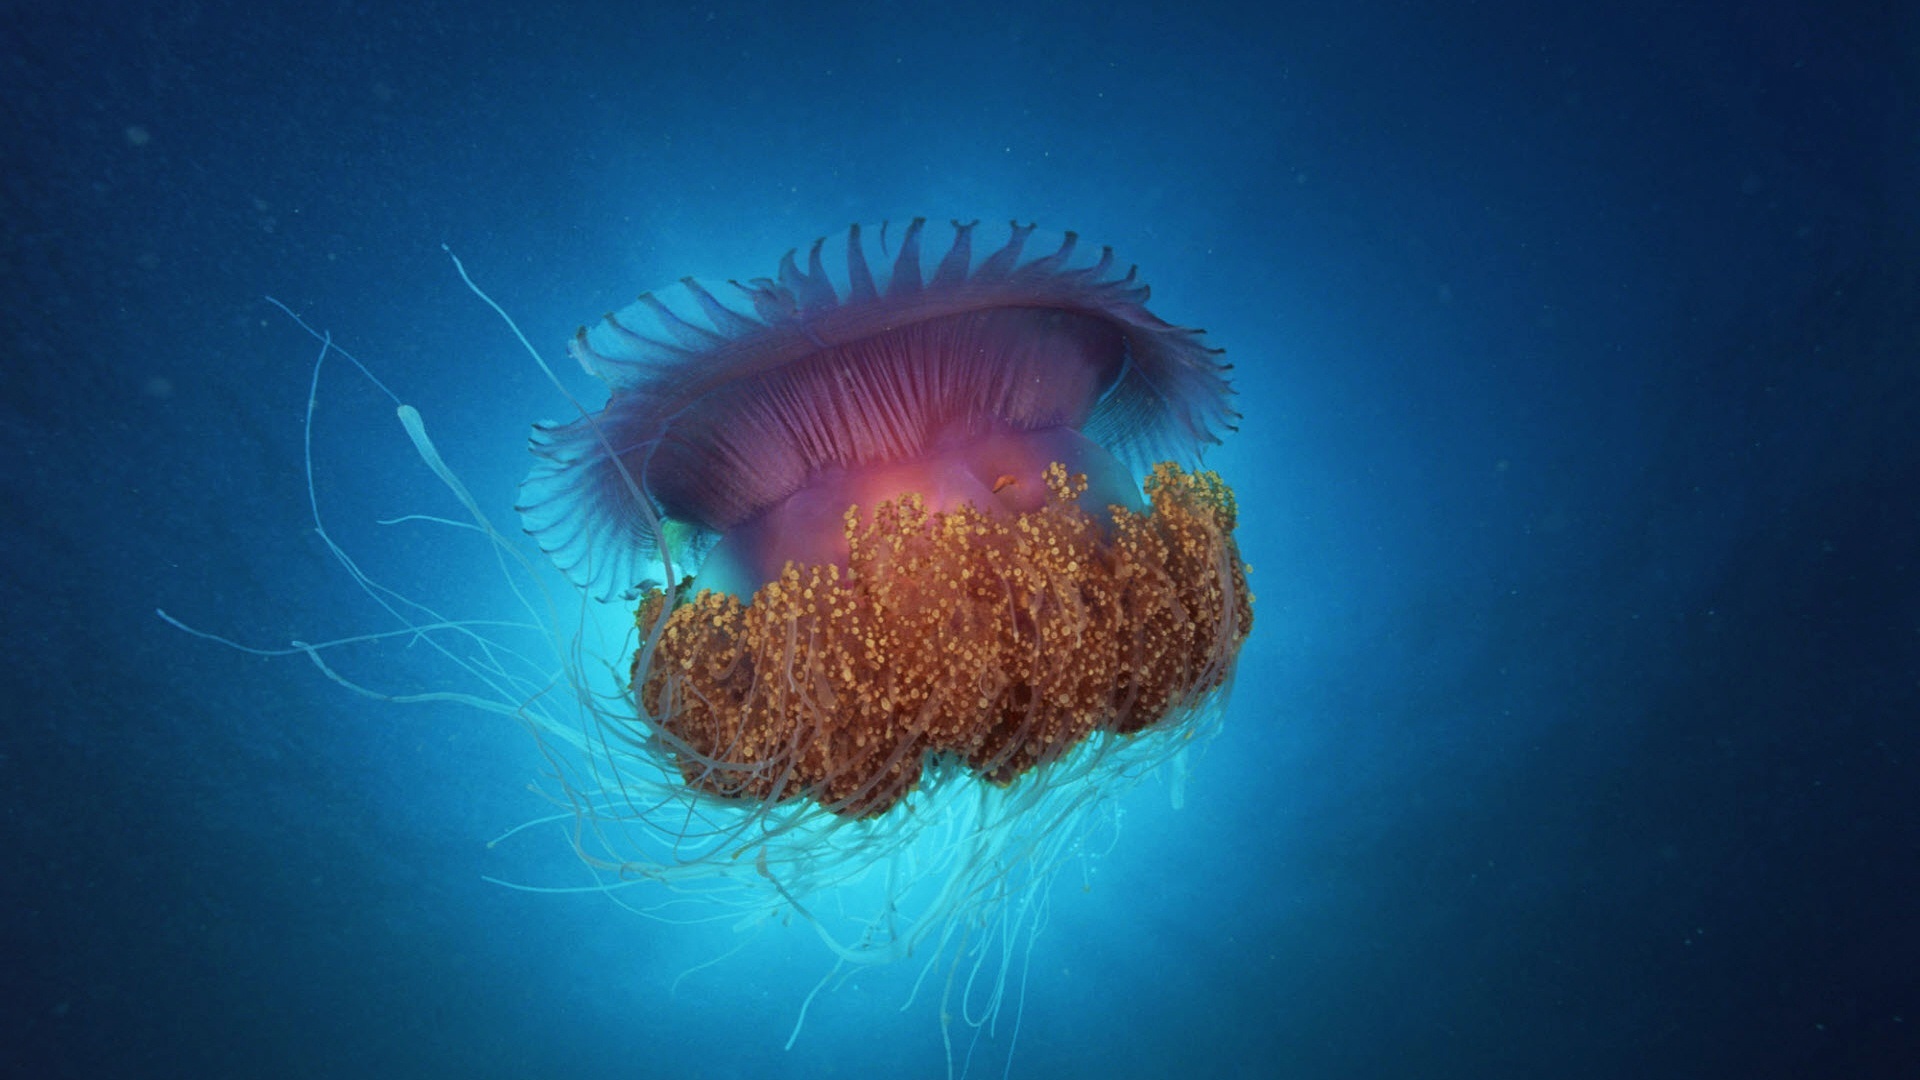 Jellyfish under sea animal wallpaper Desktop Backgrounds for